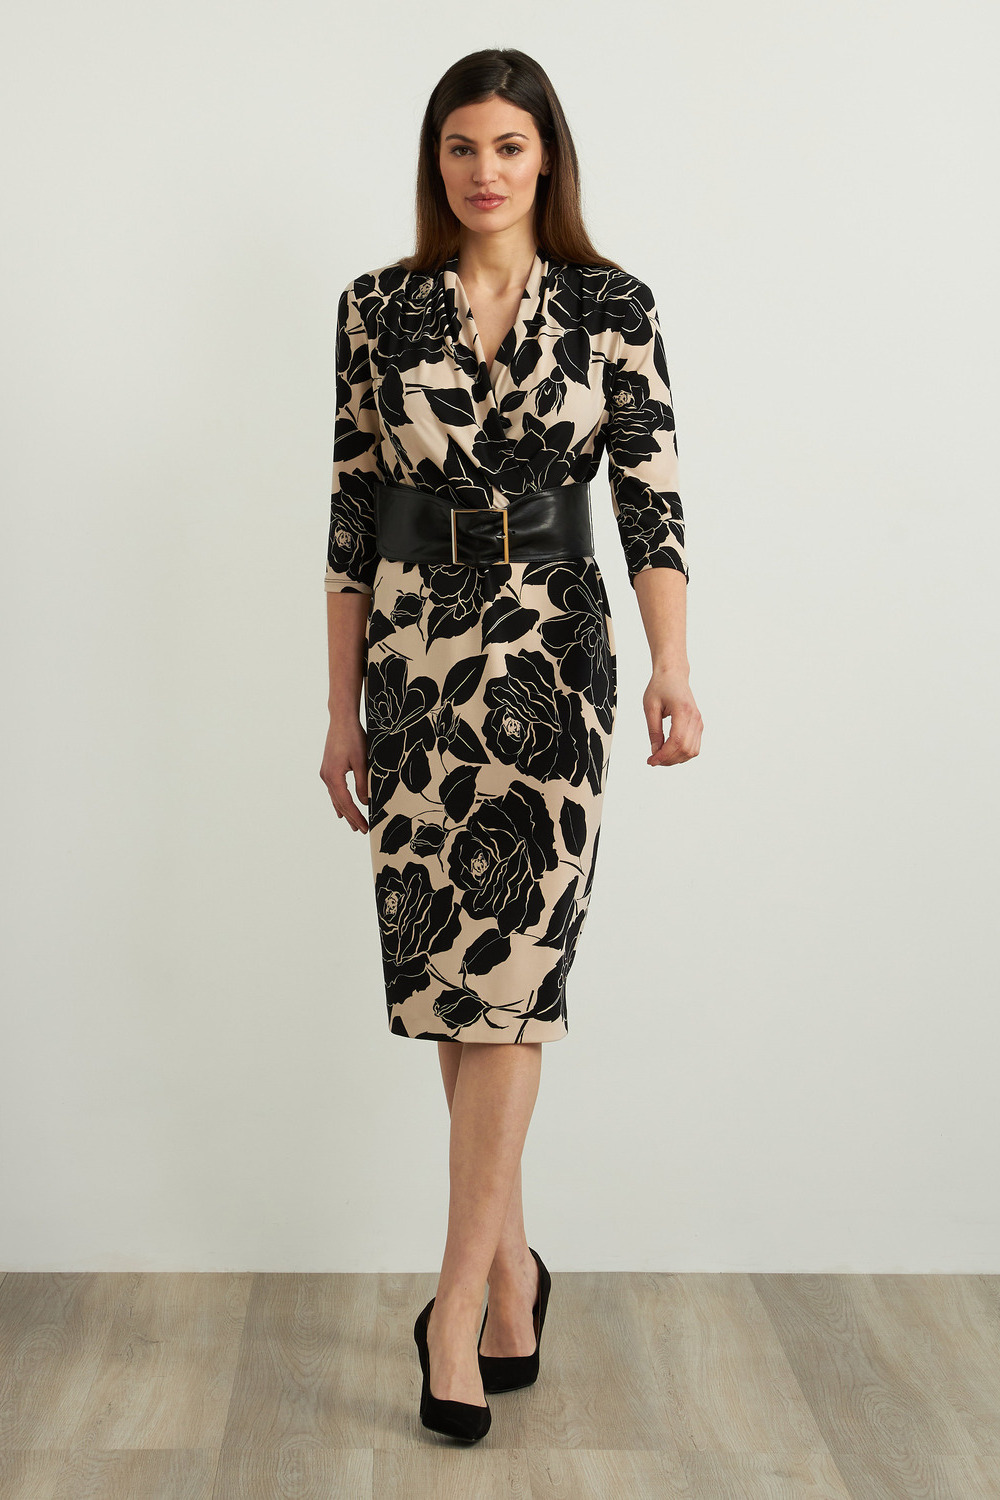 Joseph Ribkoff Floral Sheath Dress Style 213678. Black/beige